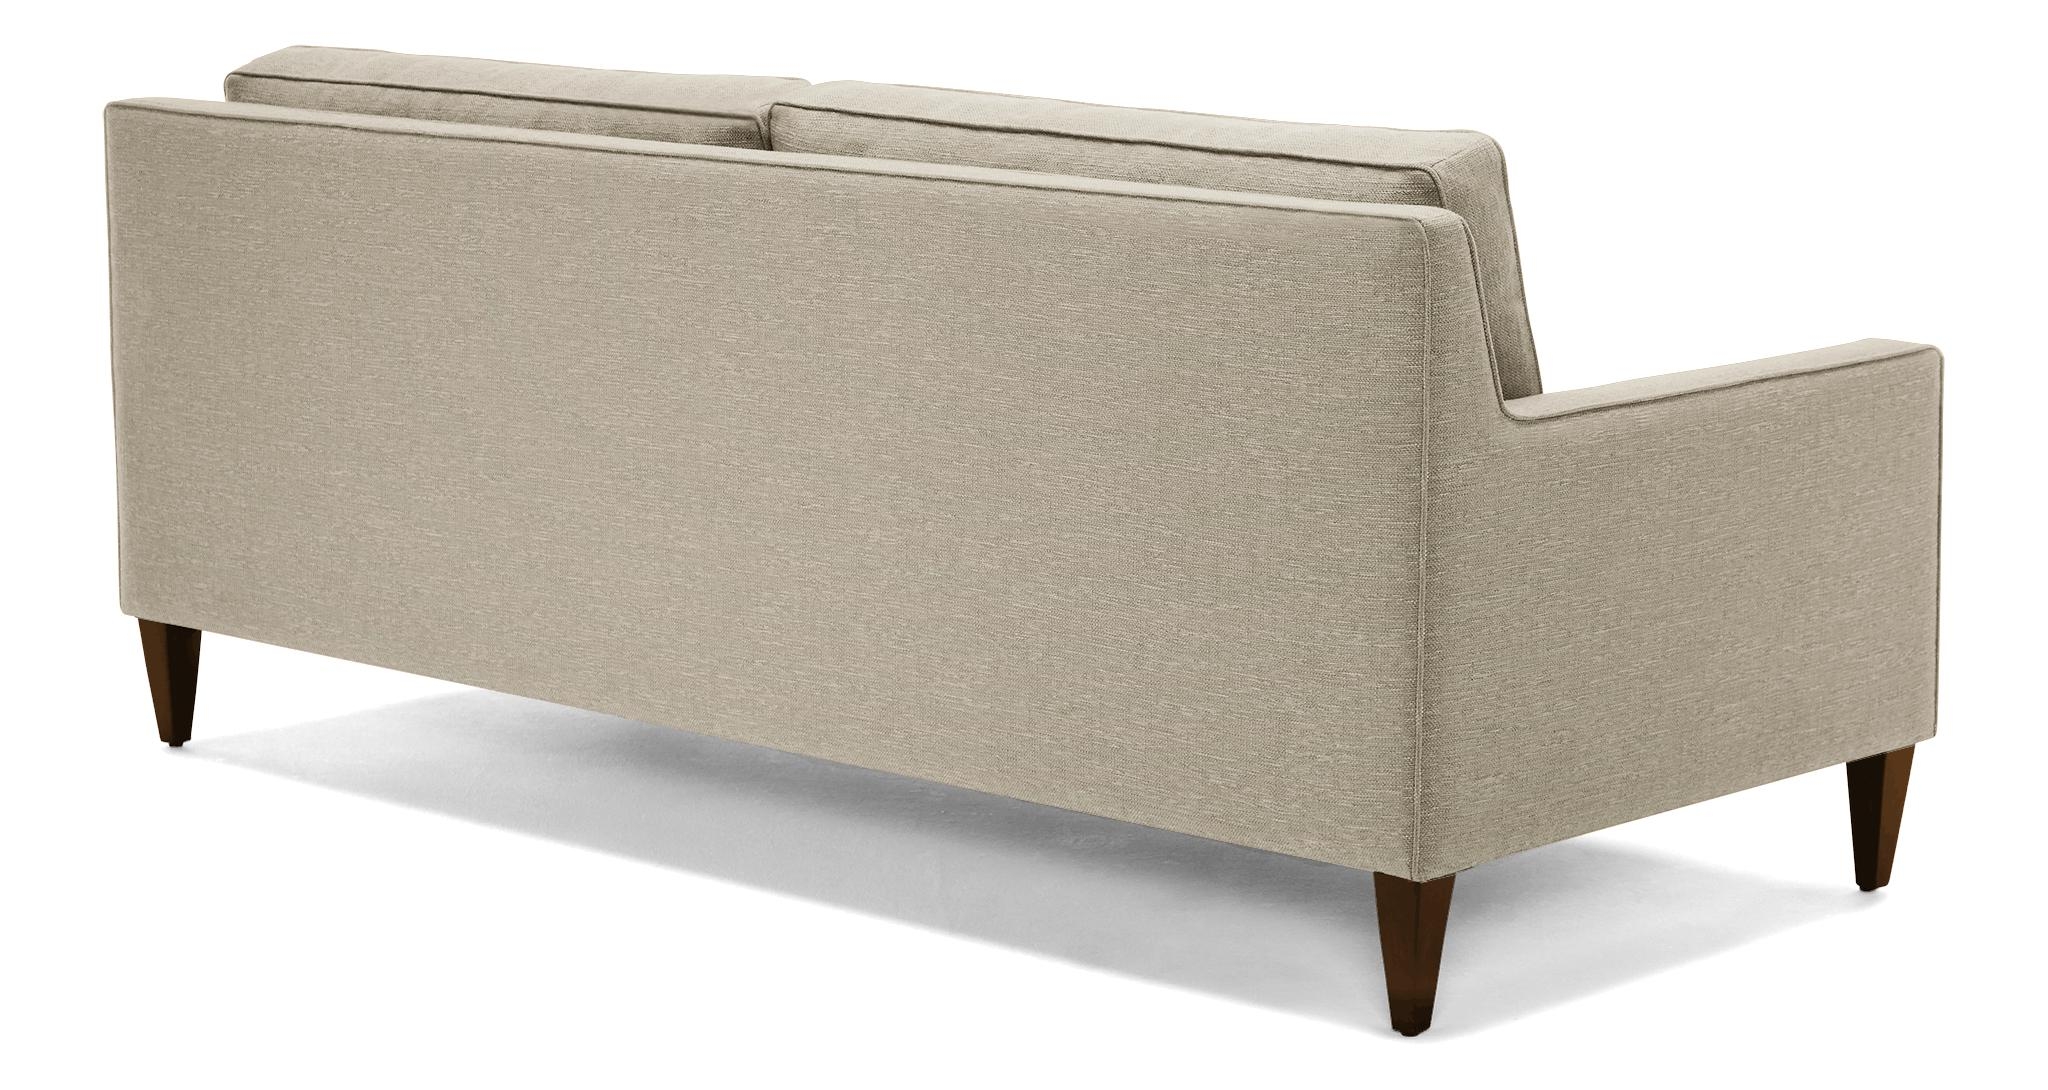 Gray Levi Mid Century Modern Sofa - Bloke Cotton - Mocha - Image 3